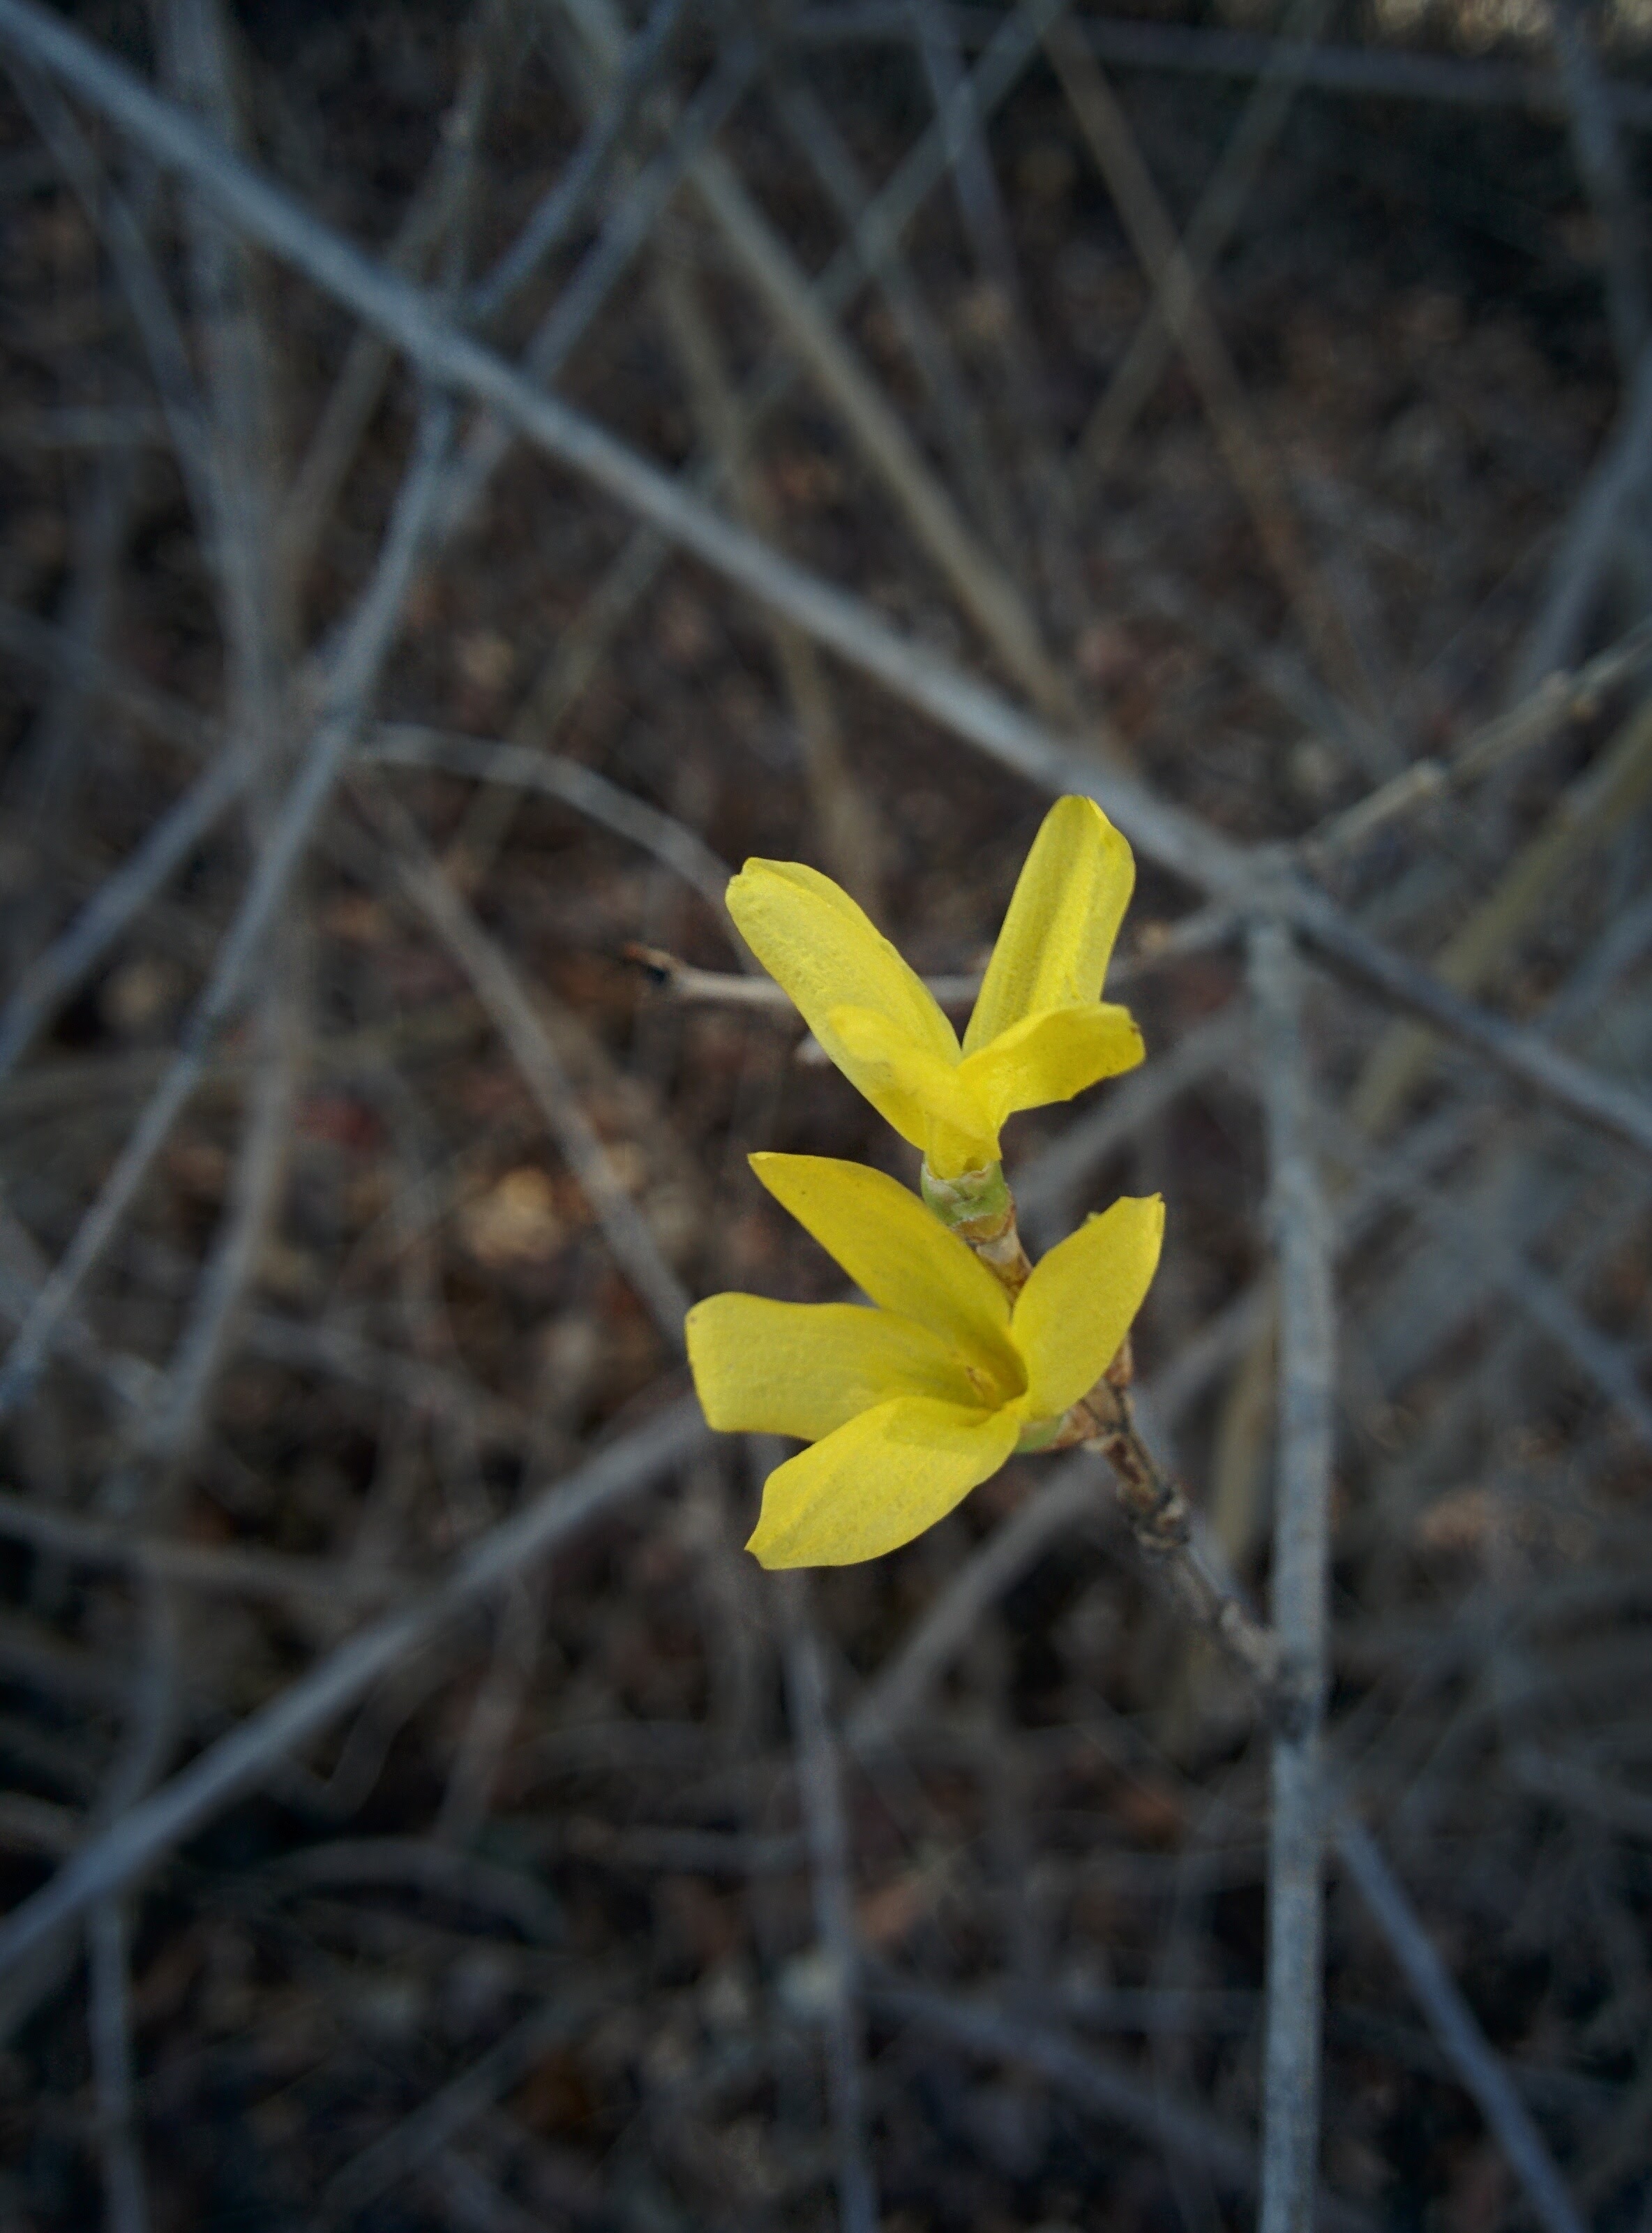 IMG_20151229_124353.jpg 한 겨울에 핀 노란색 개나리 꽃